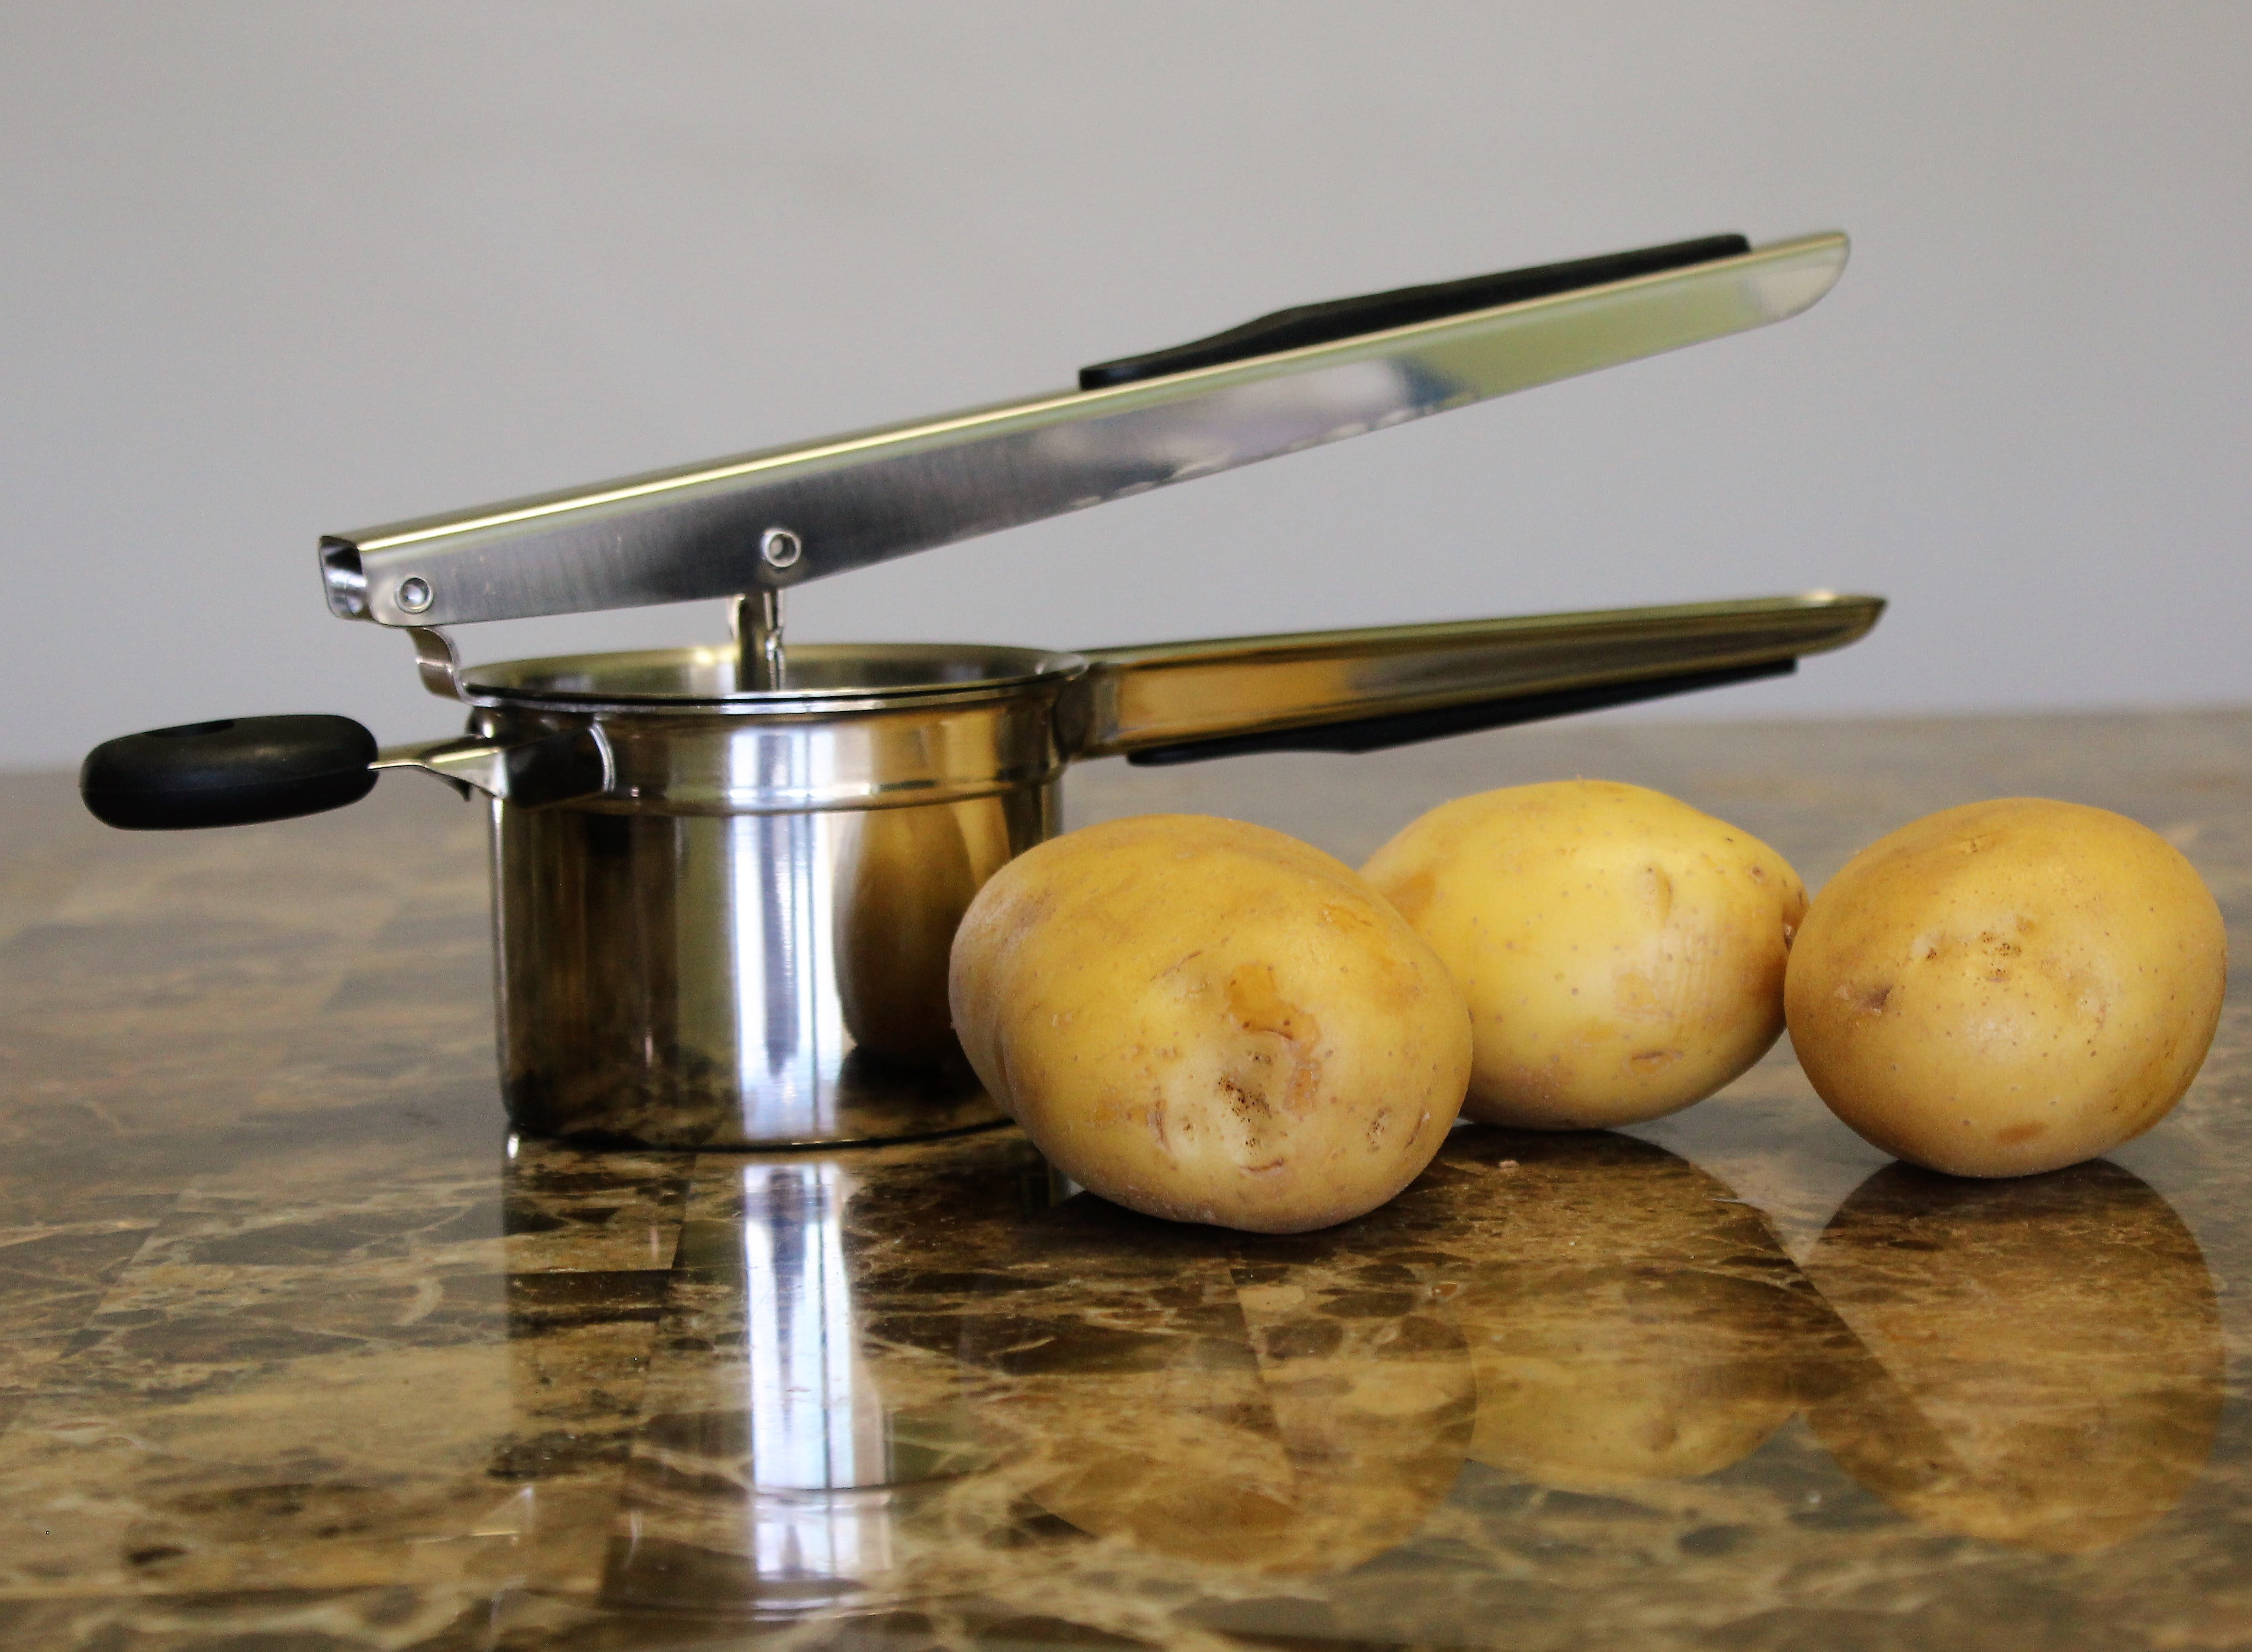 US$ 7.49 - Potato Masher,Stainless Steel Gold Handle Potato Ricer